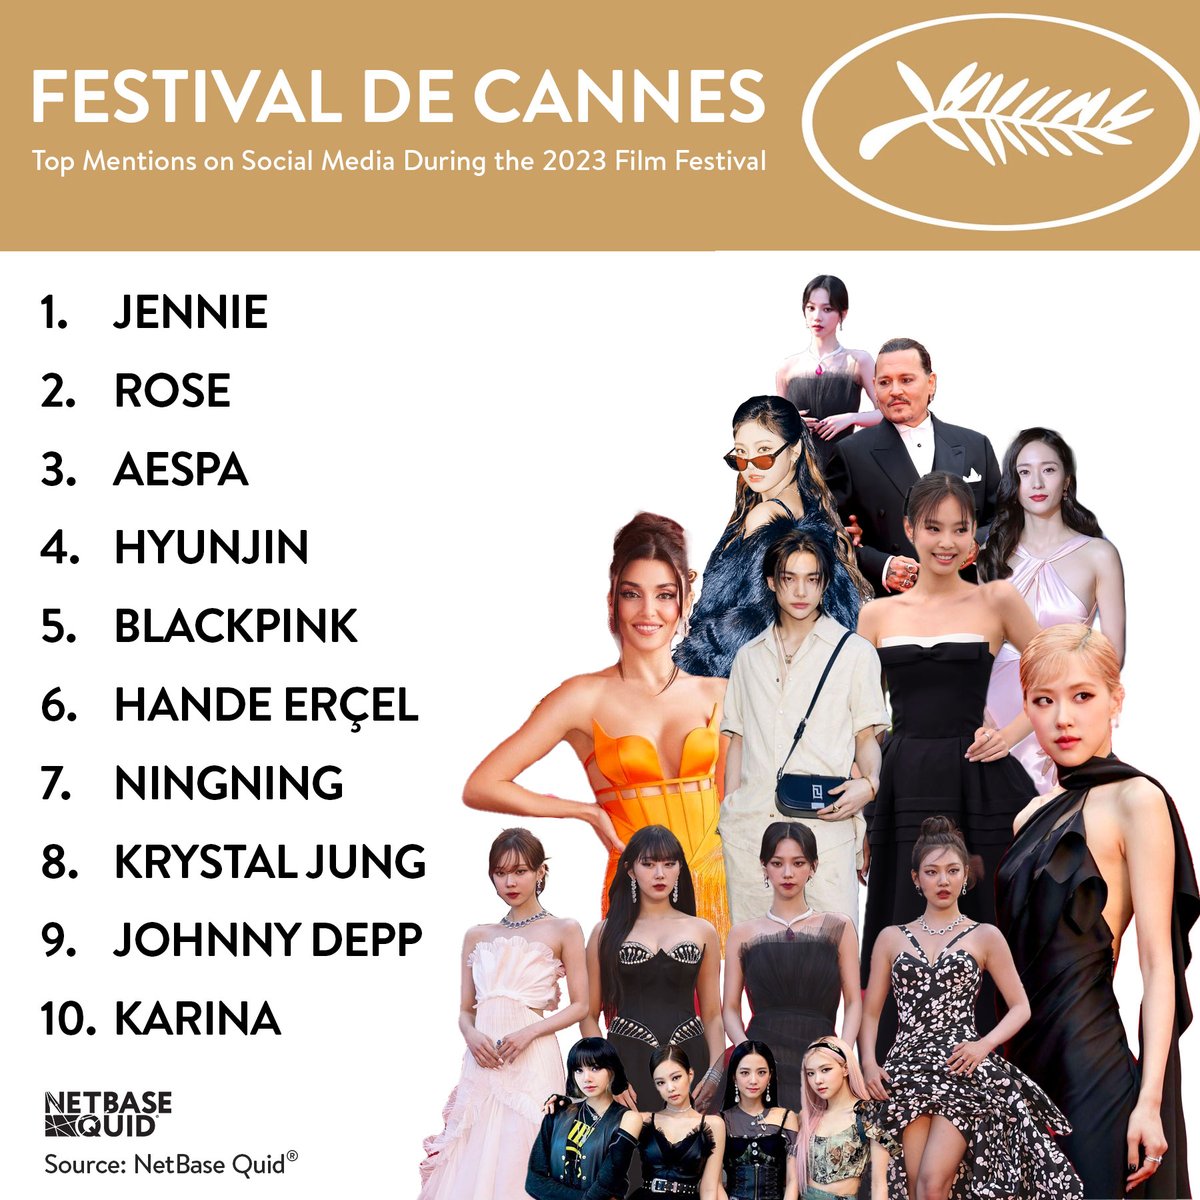 Top 10 Most Mentioned Artists On Social Media During the #CannesFilmFestival2023 As Per #Netbasequid:
1️⃣ #JENNIE
2️⃣ #ROSÉ
3️⃣ #AESPA
4️⃣ #HYUNJIN
5️⃣ #BLACKPINK
6️⃣ #HandeErcel
7️⃣ #Ningning
8️⃣ #KrystalJung
9️⃣ #JohnnyDepp
🔟 #KARINA9️️
@BLACKPINK @aespa_official @Stray_Kids